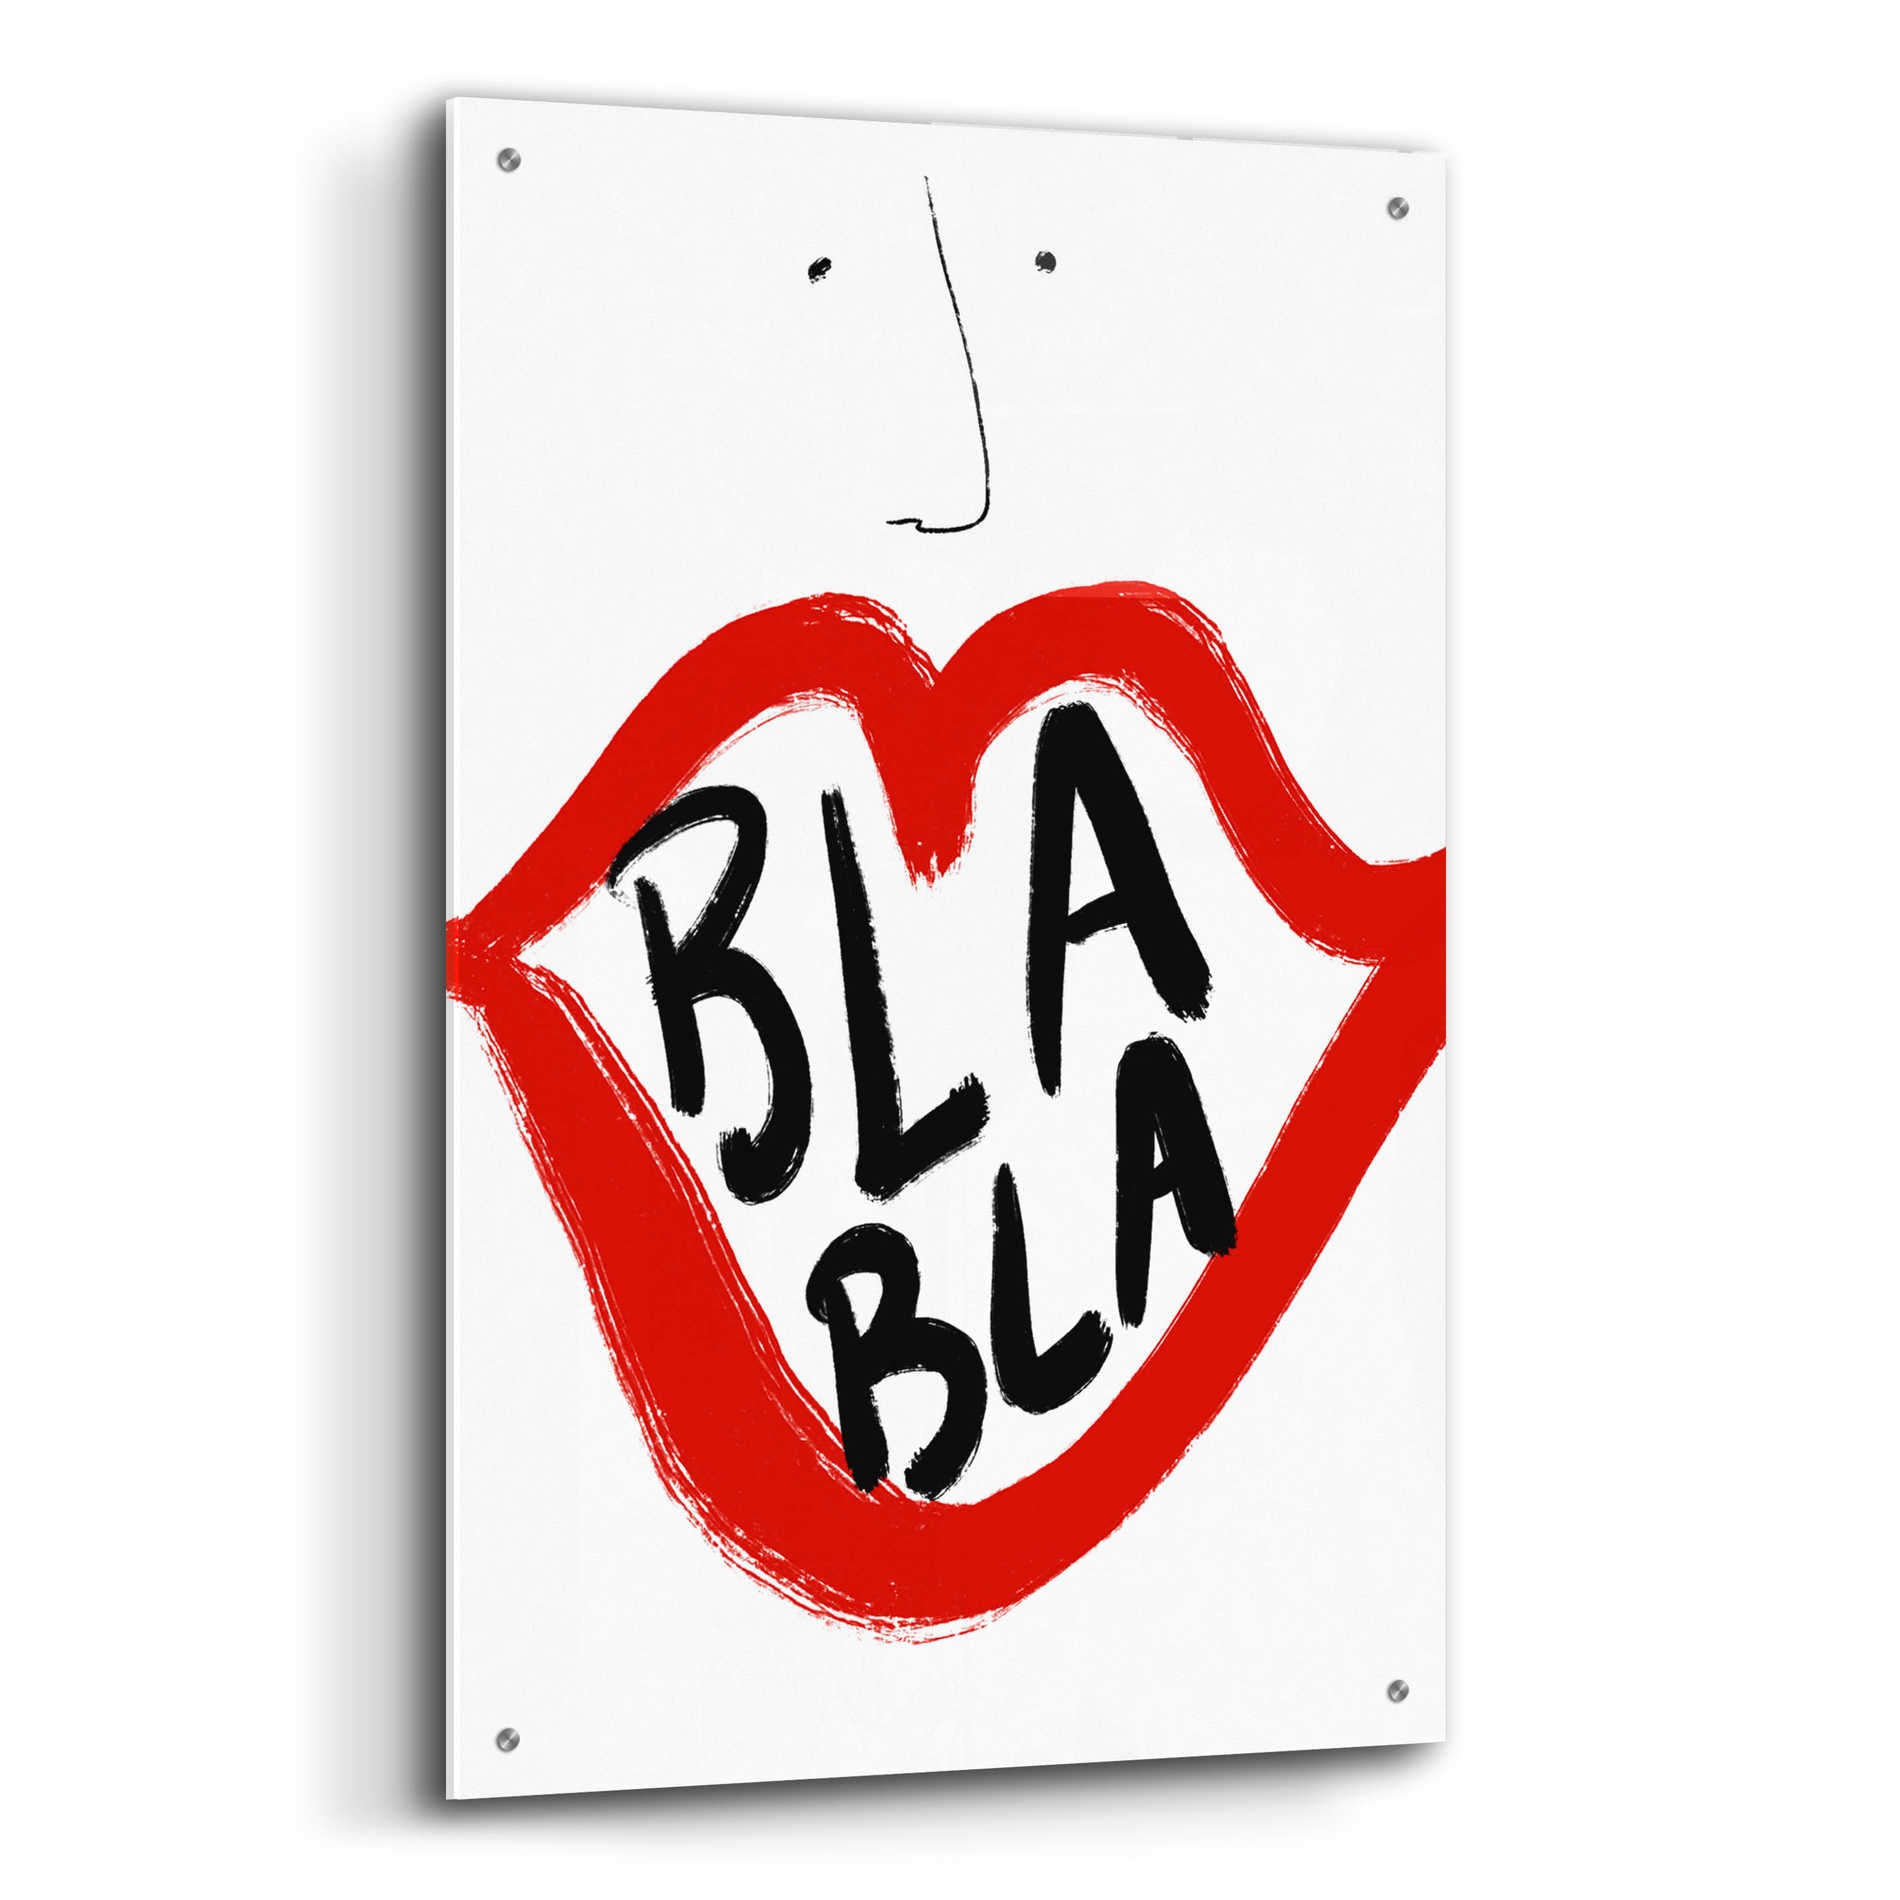 Epic Art 'Bla Bla' by Cesare Bellassai, Acrylic Glass Wall Art,24x36